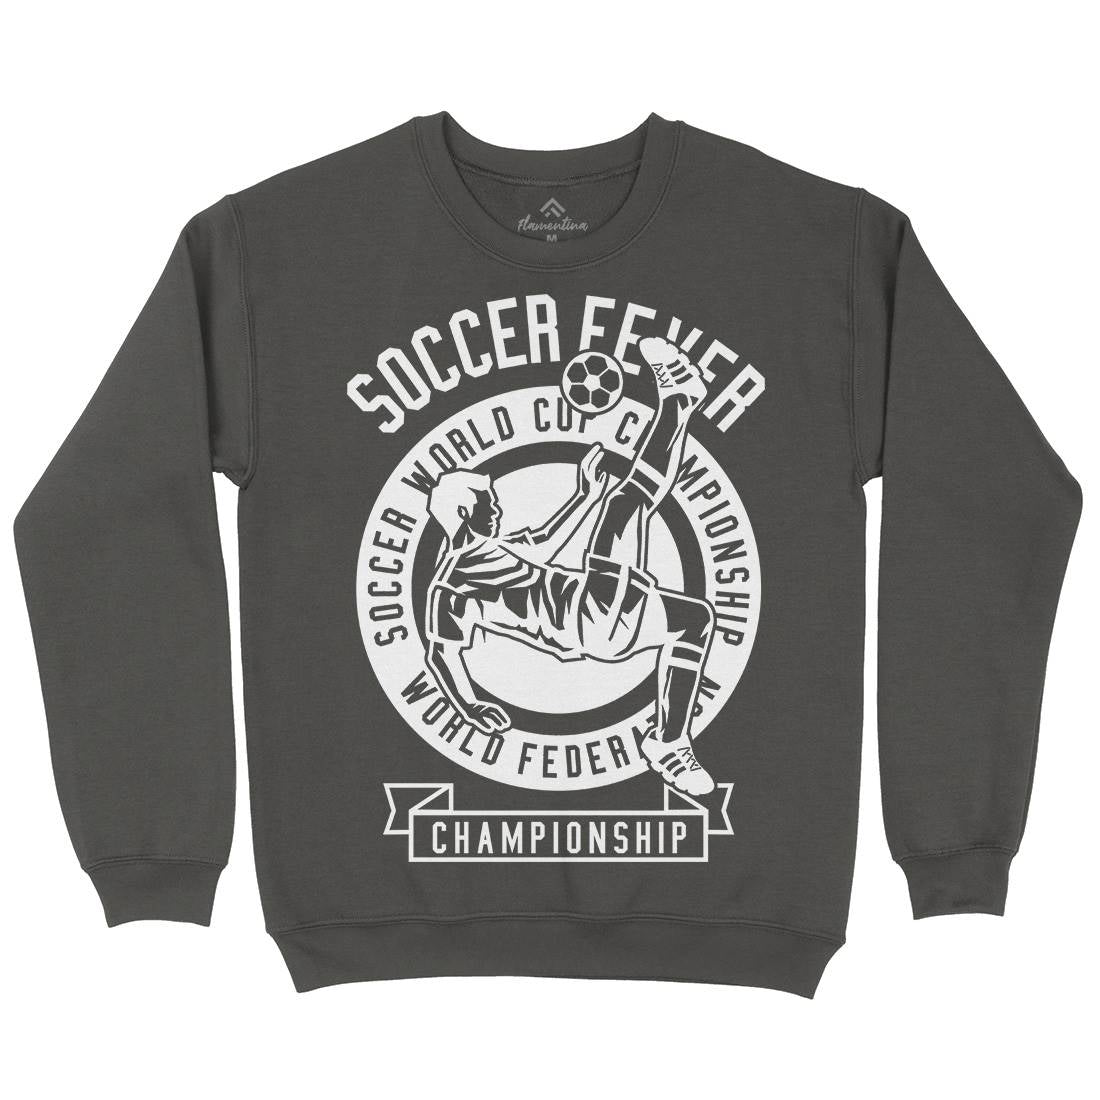 Soccer Fever Kids Crew Neck Sweatshirt Sport B634